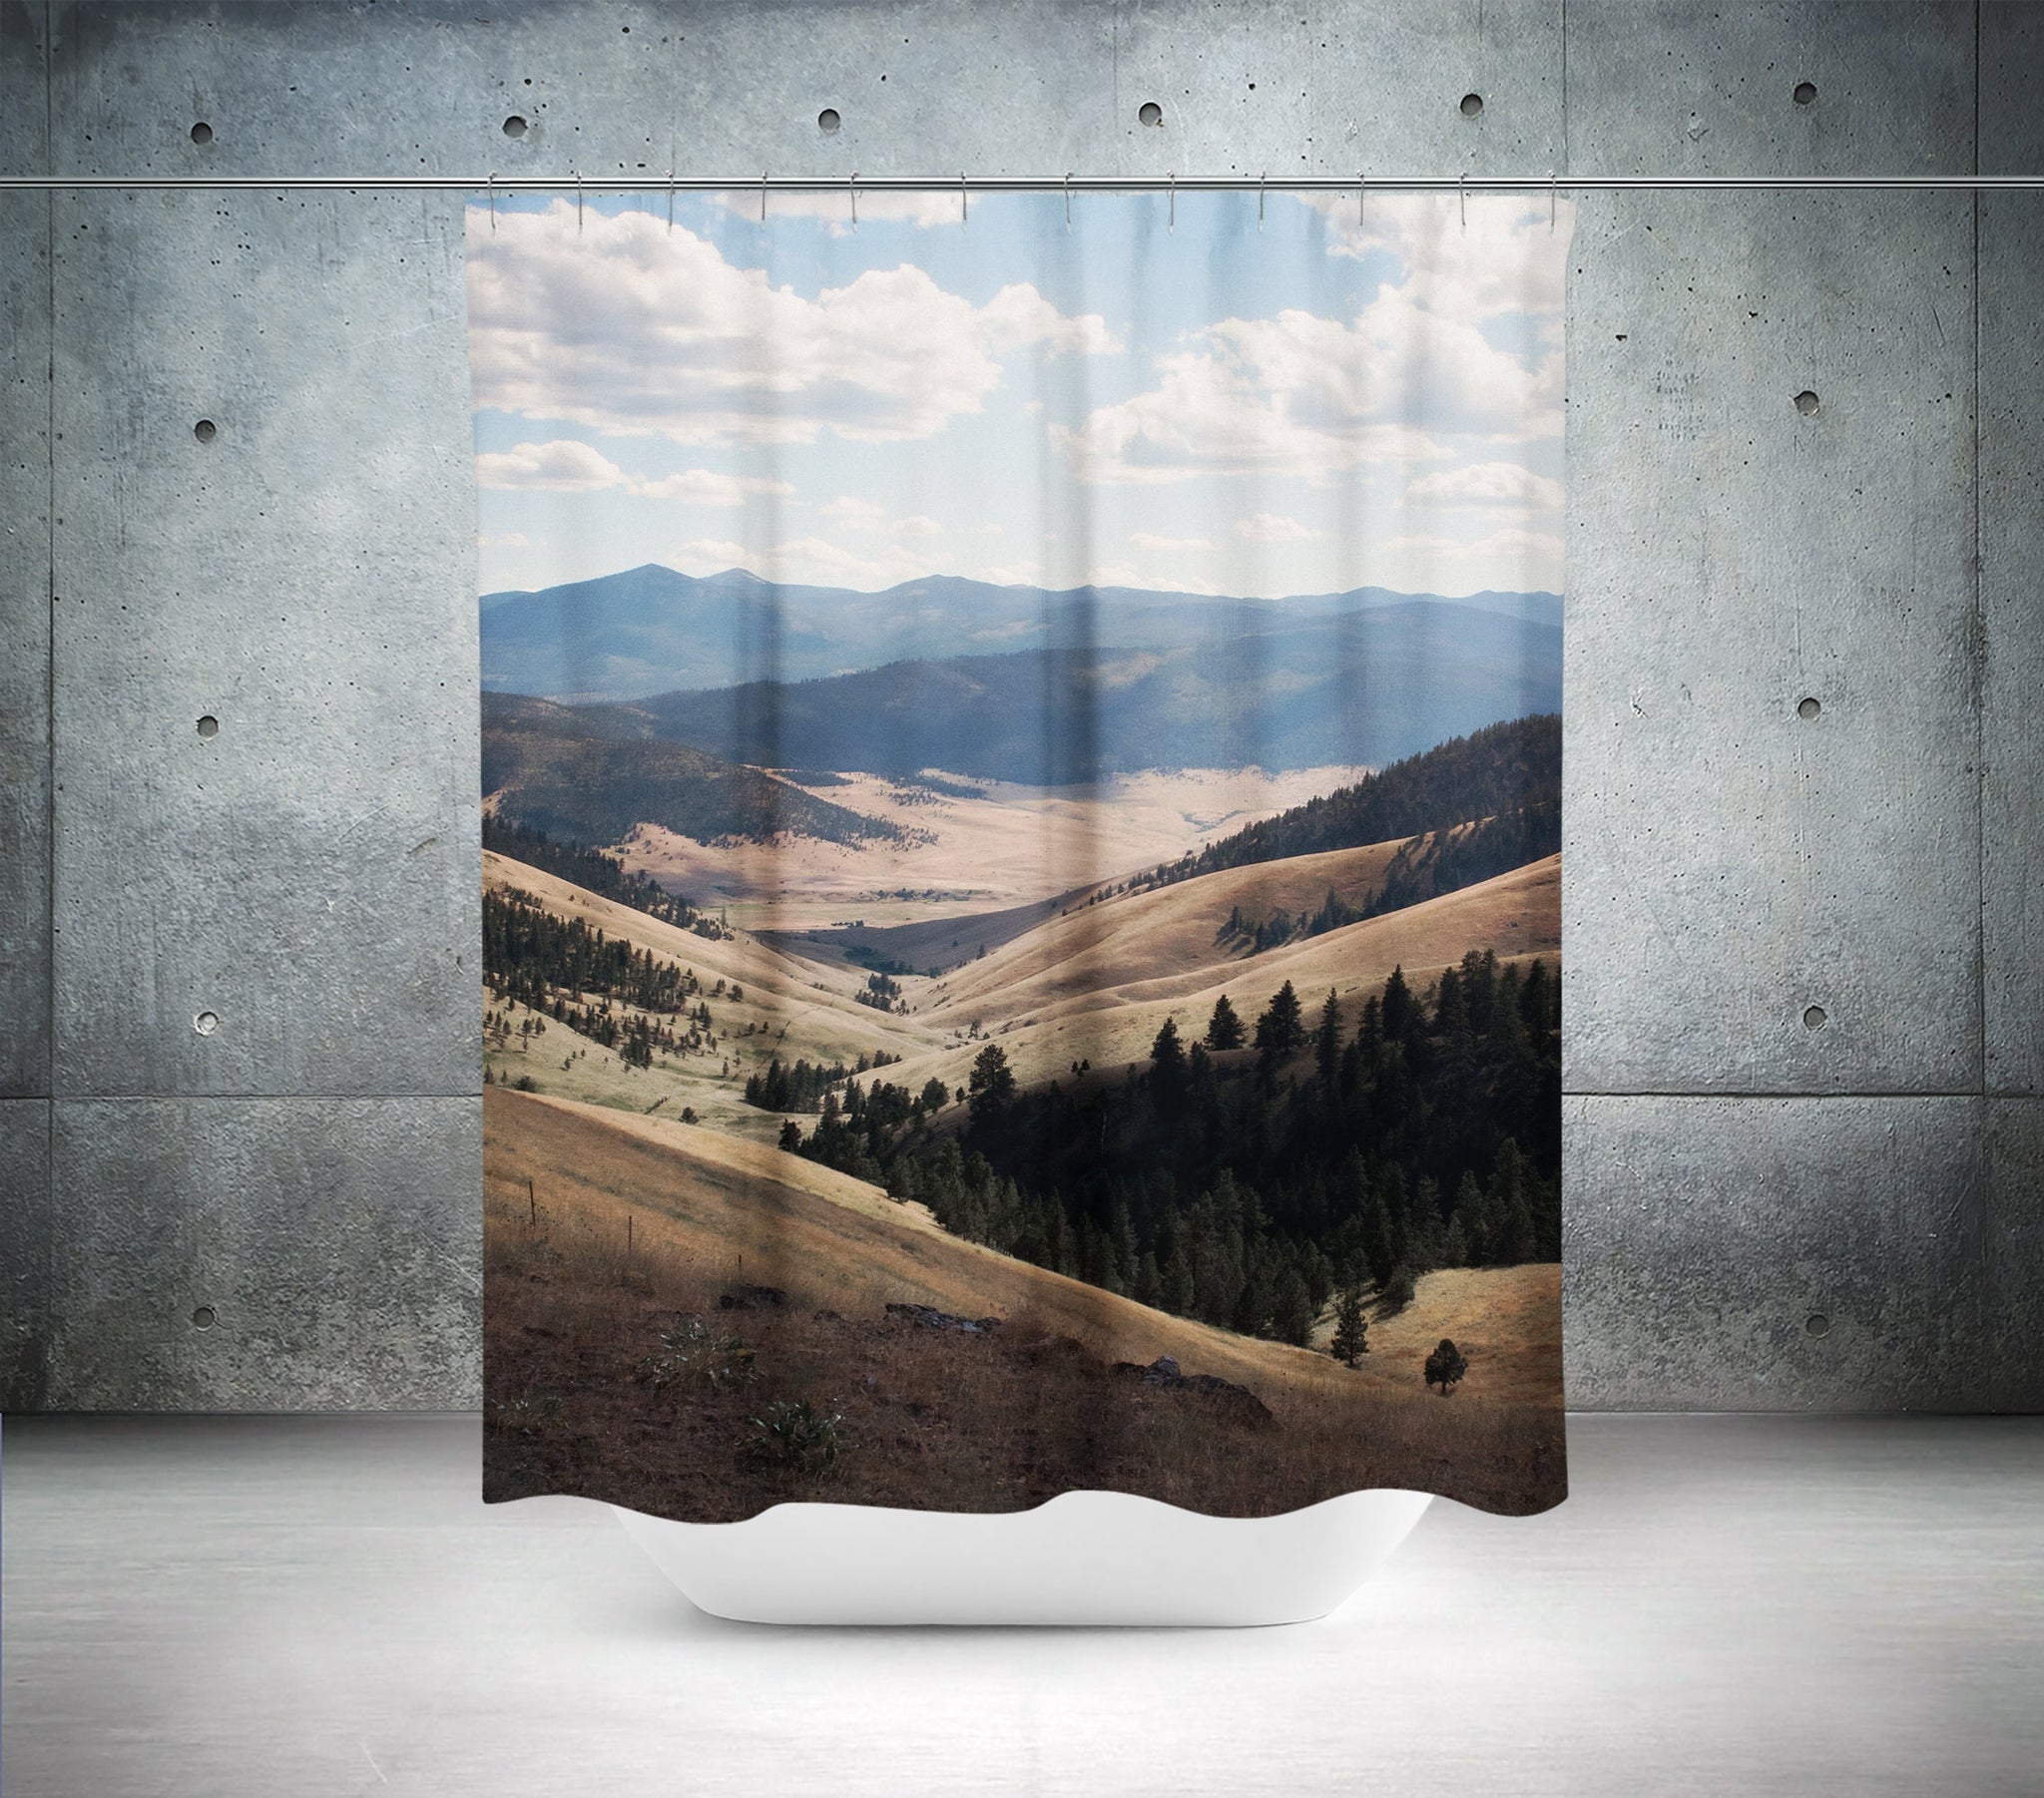 Scenic Western Shower Curtain 71x74 inch Montana Rustic